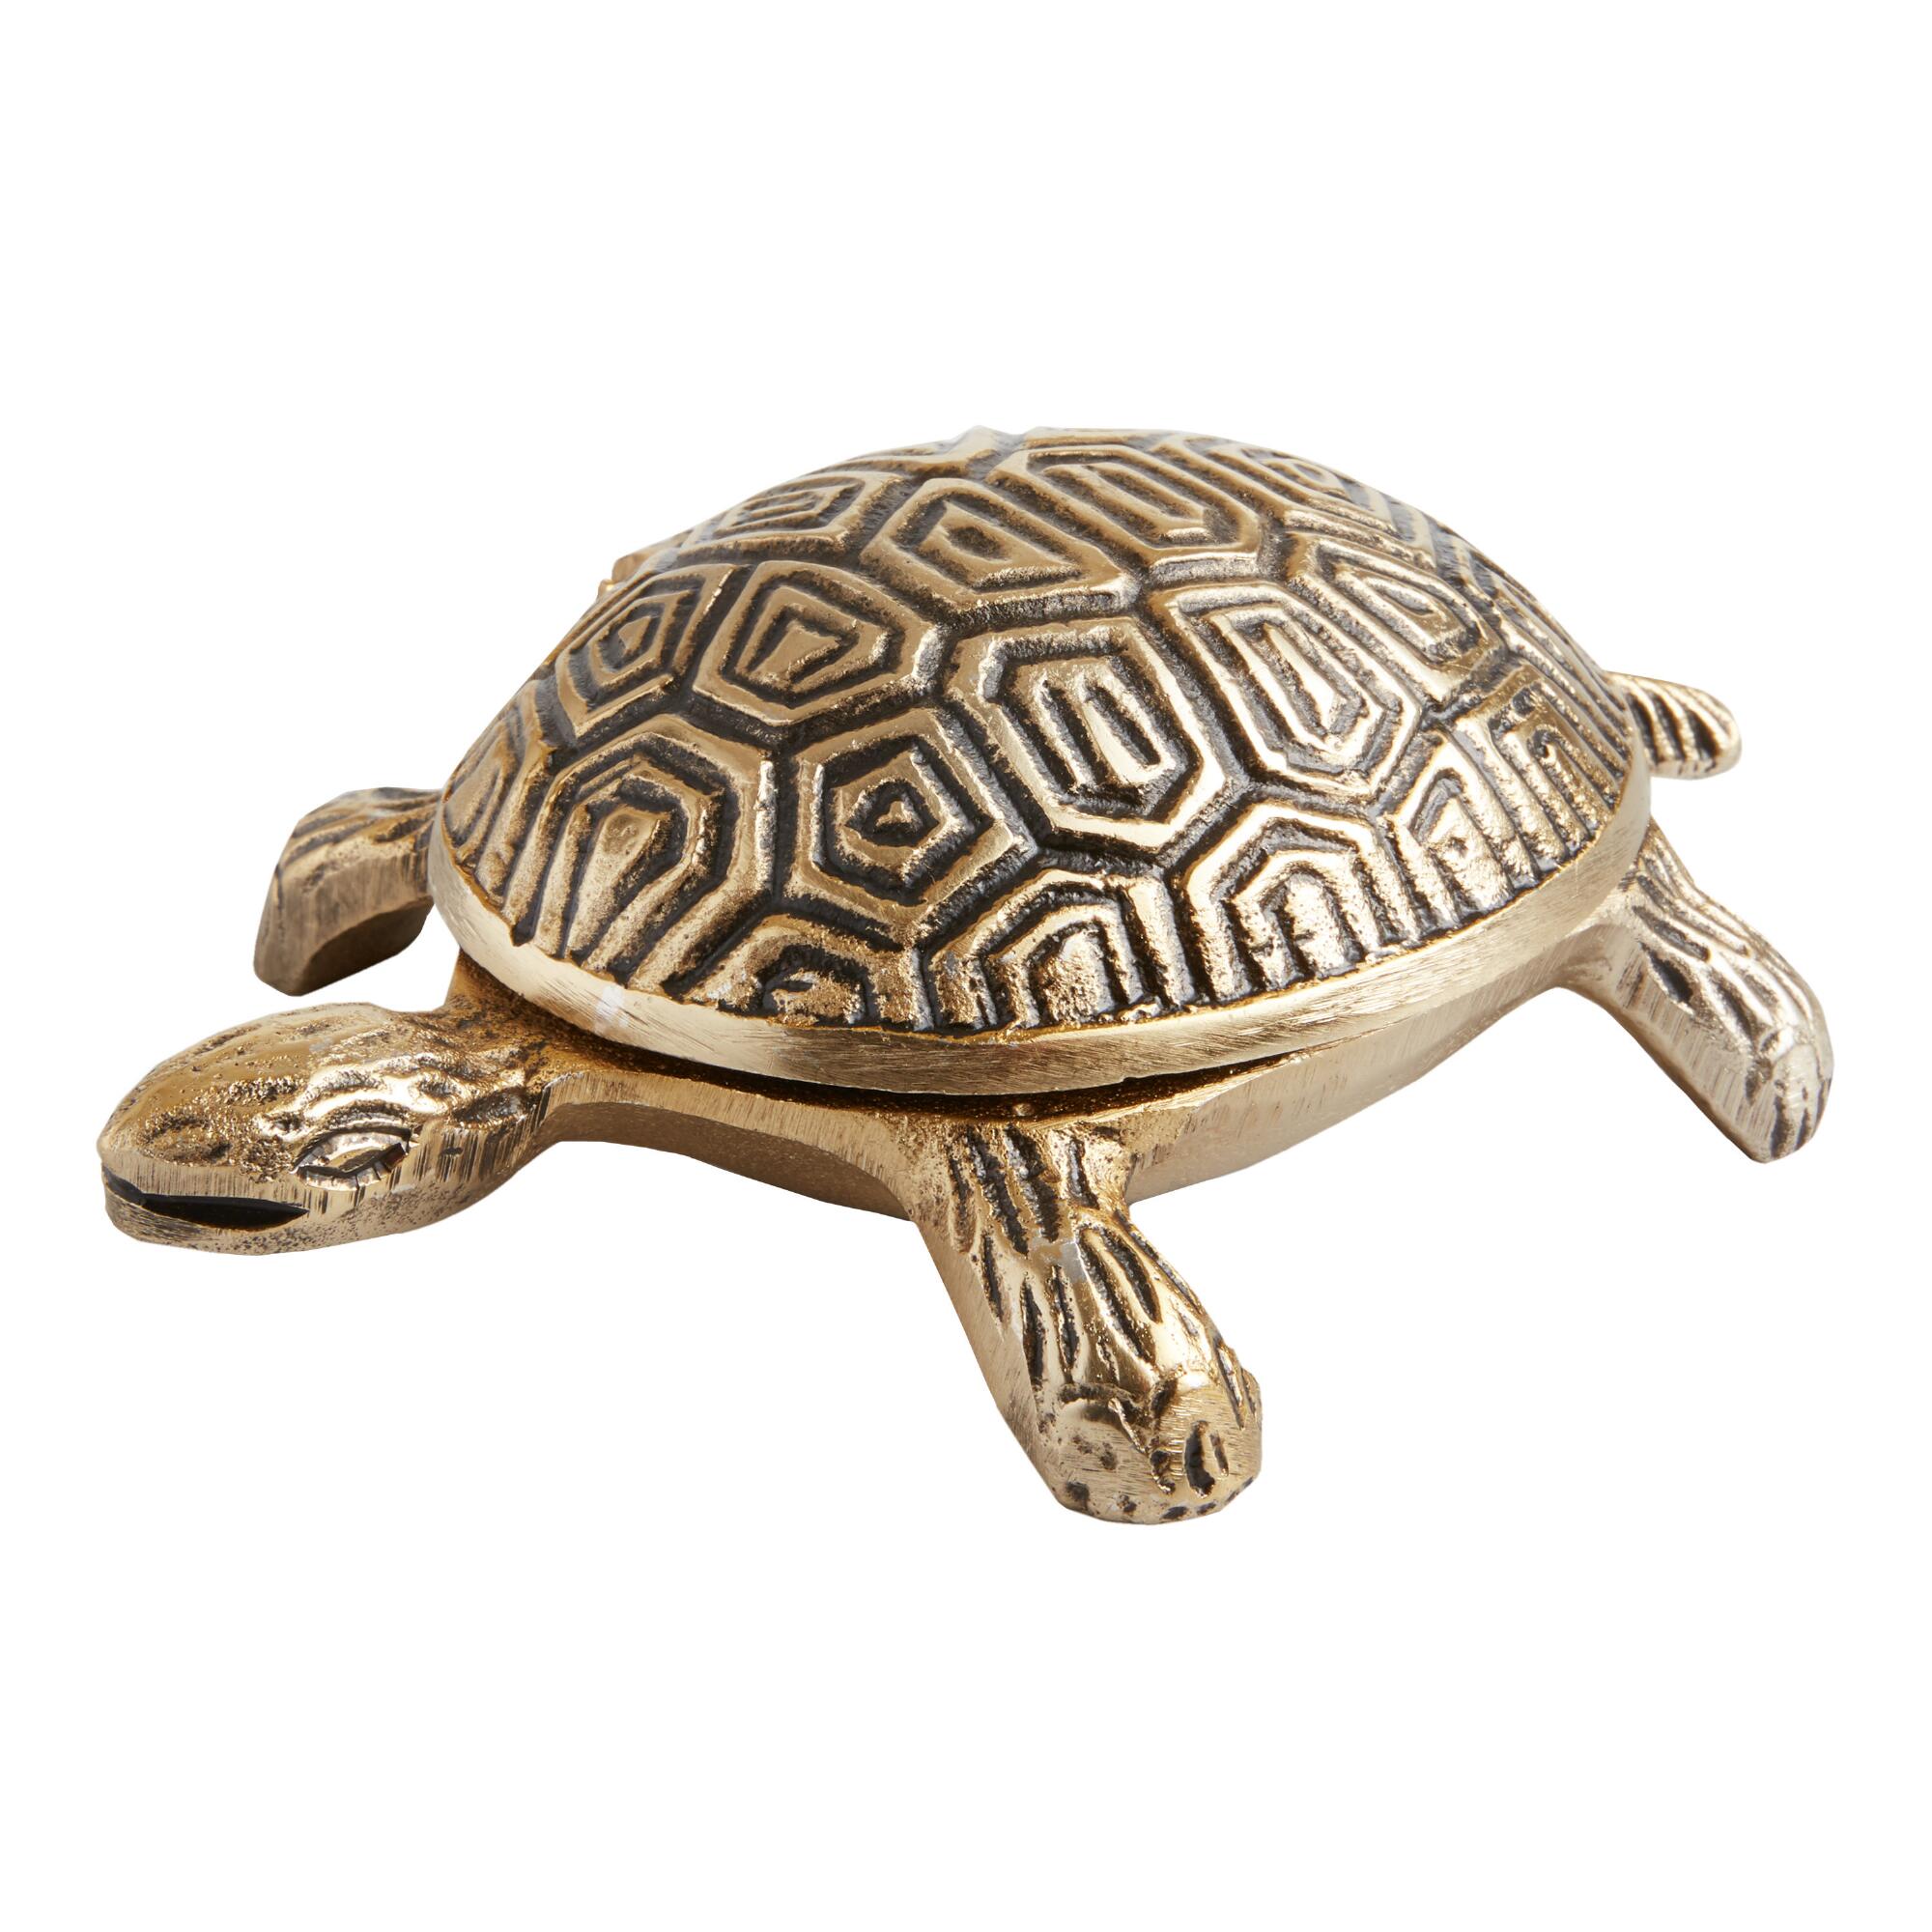 Antique Gold Turtle Trinket Box by World Market